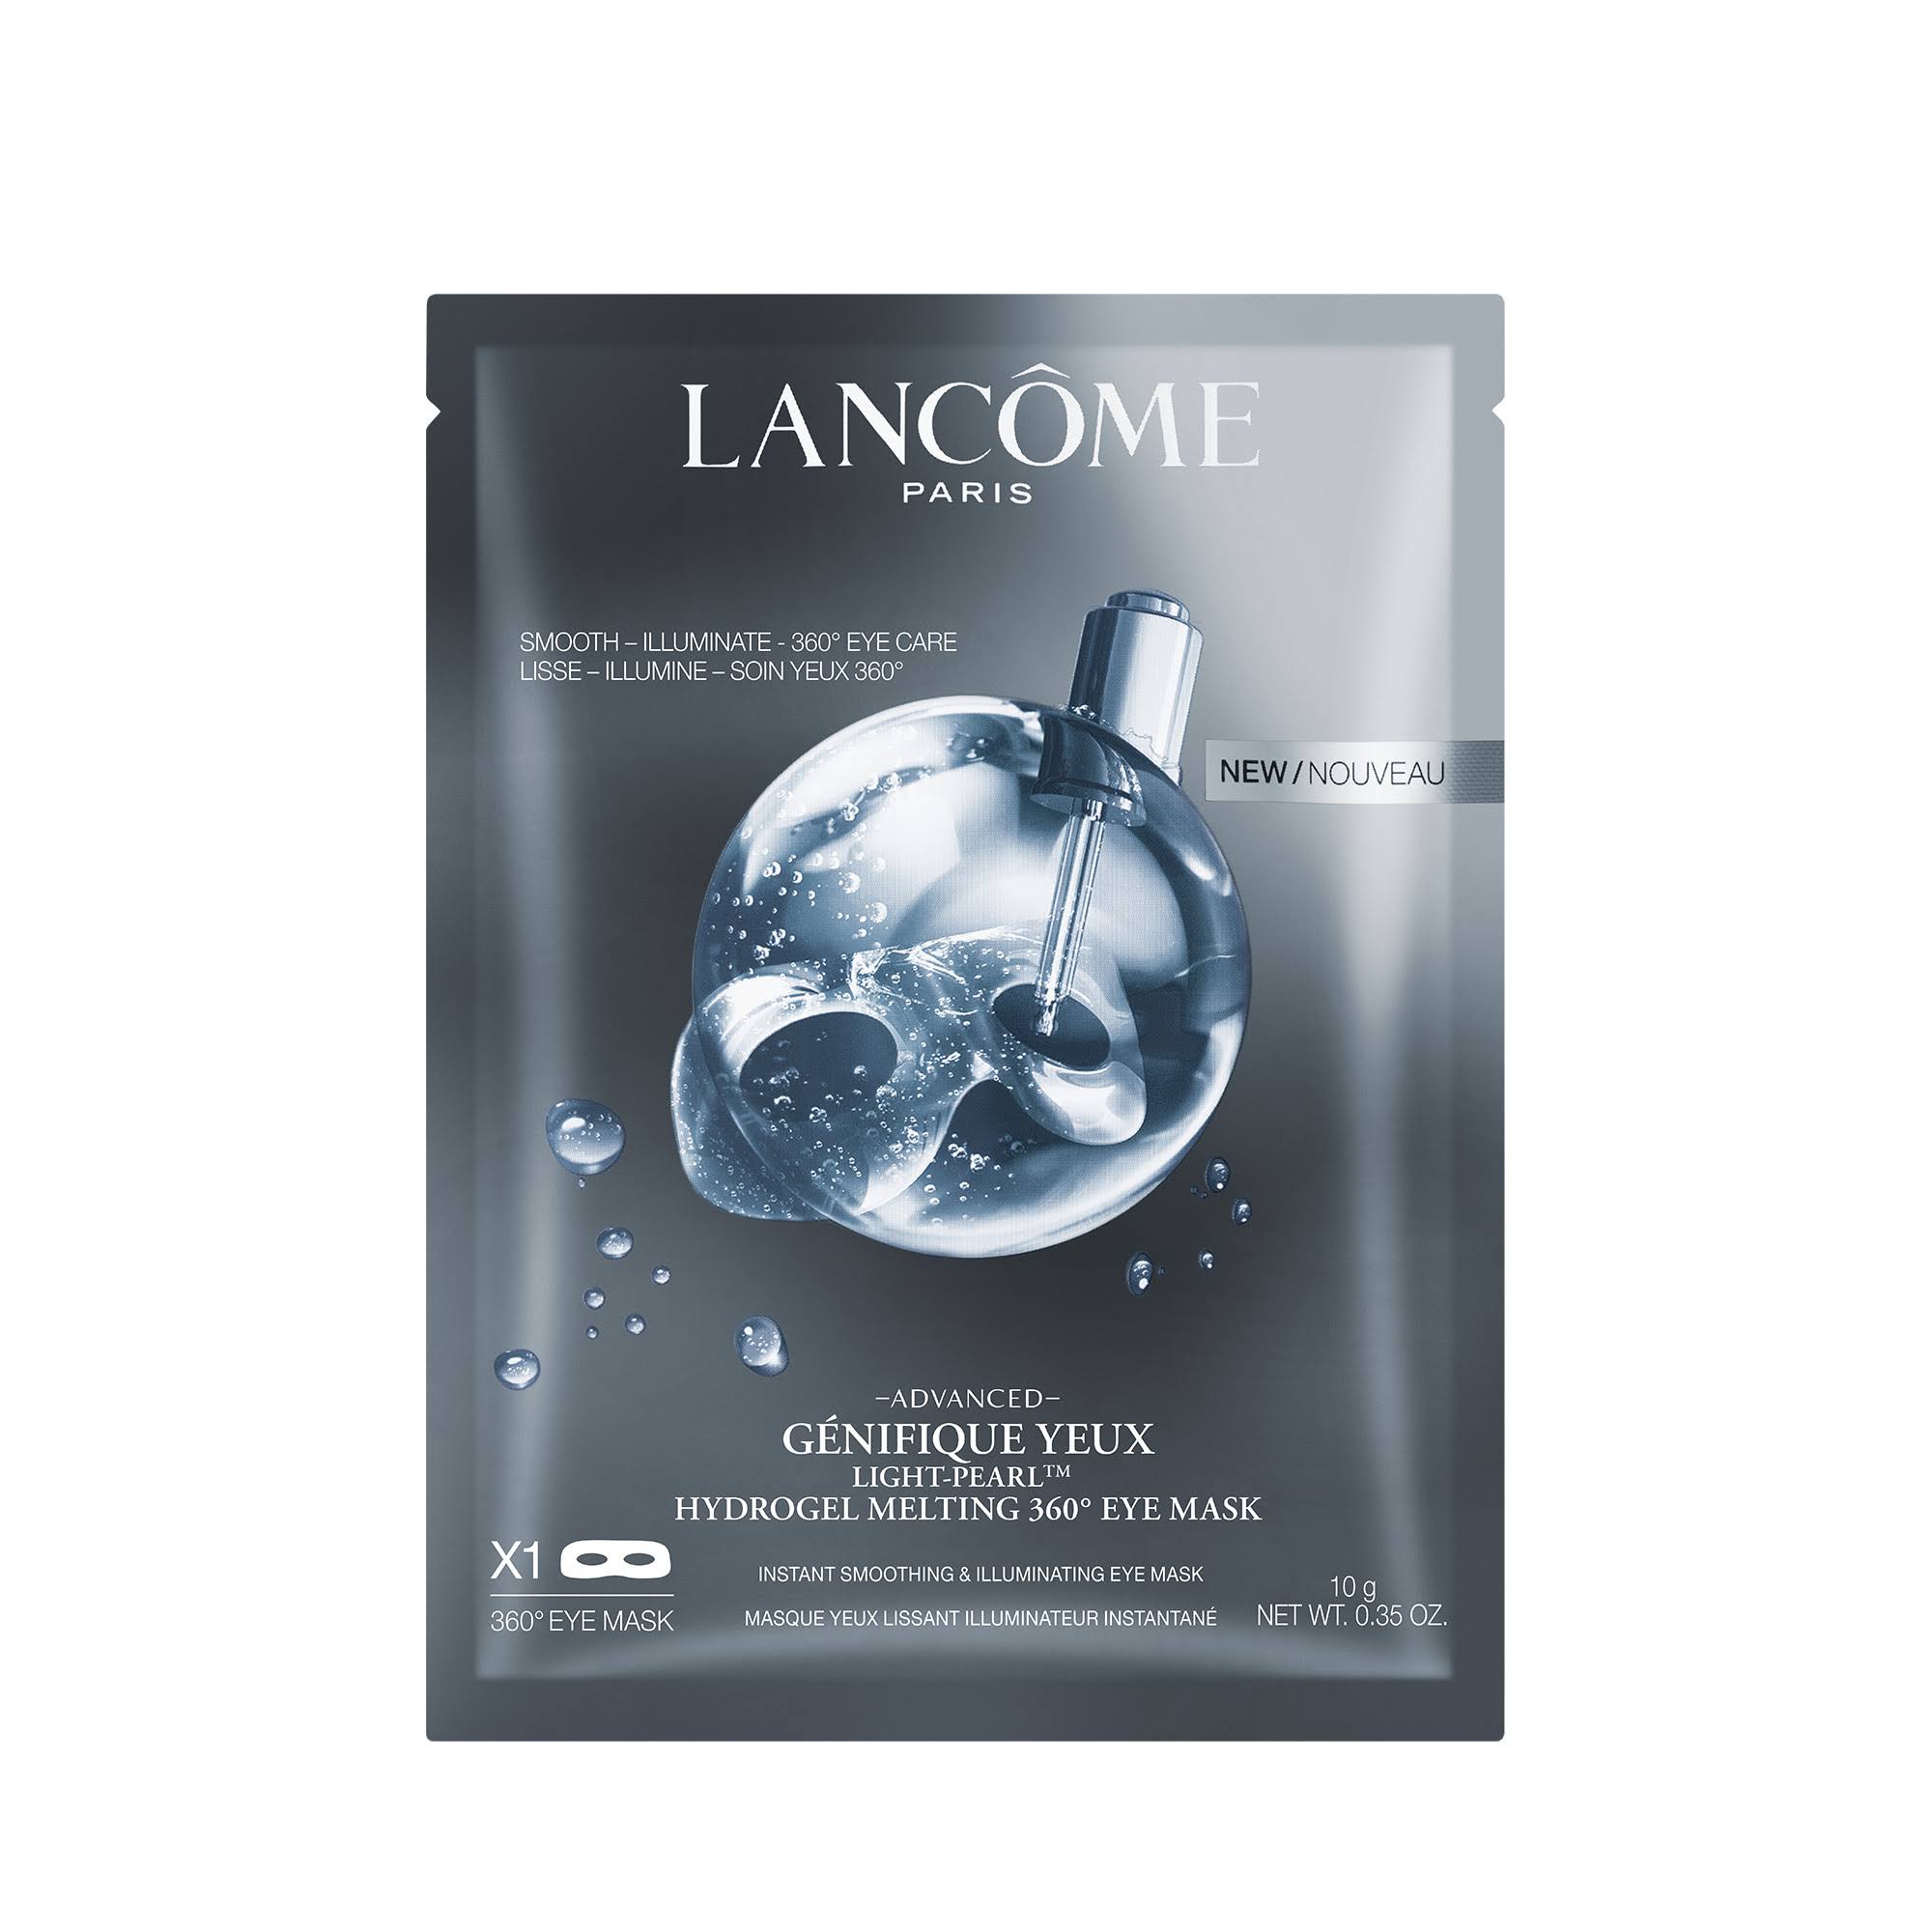 Lancôme Advanced Génifique Yeux Light Pearl Hydrogel Melting 360° Eye Mask